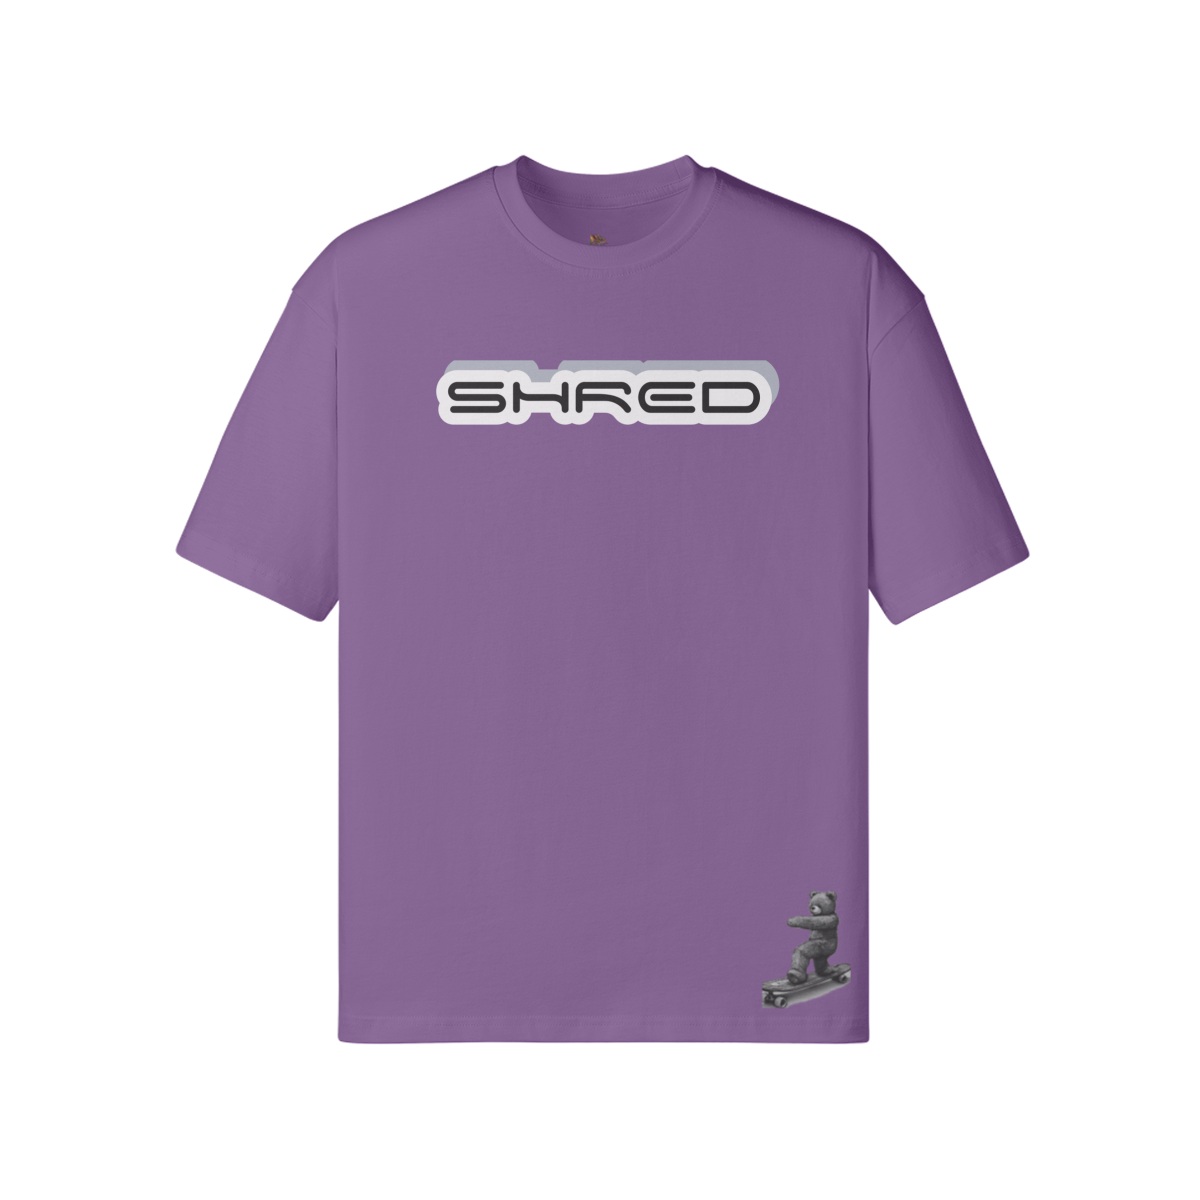 PURPLE HAZE - Teddy Ride Shred 190GSM Unisex Loose T-shirt - Unisex T-Shirt at TFC&H Co.